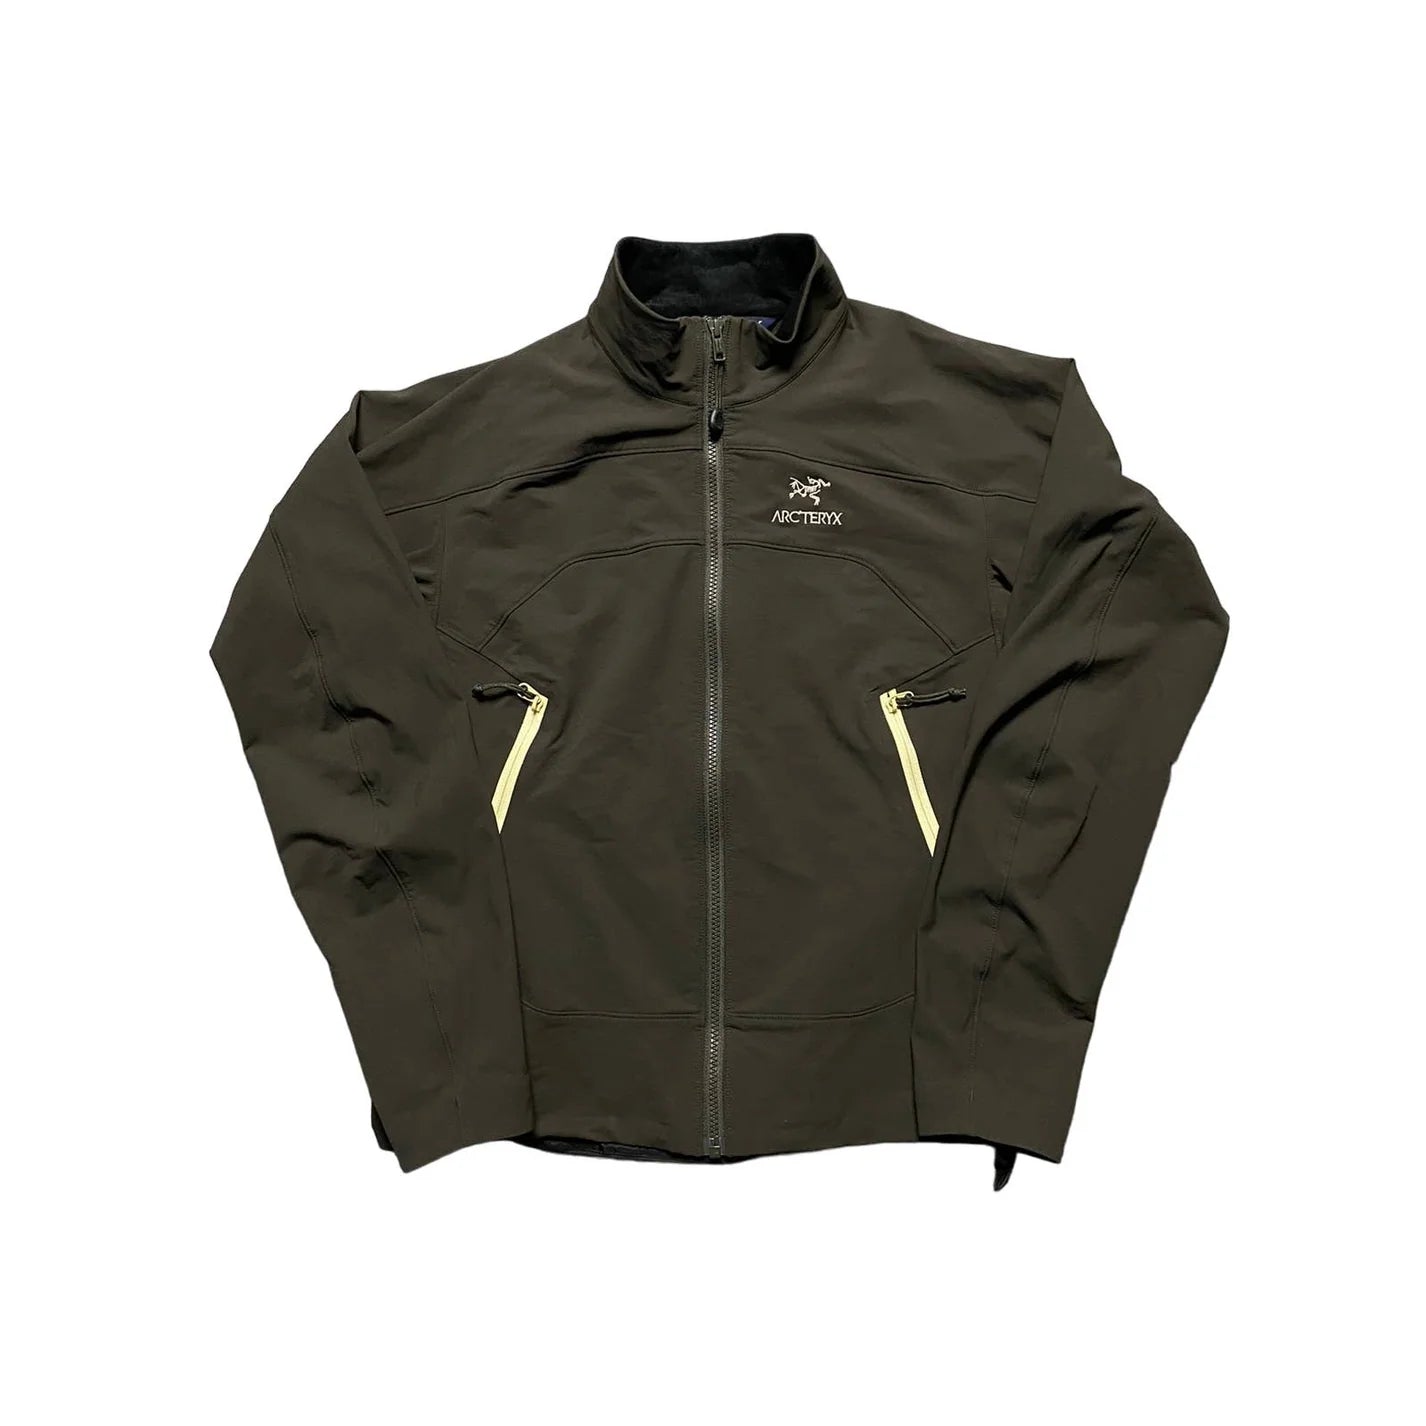 Arc’teryx Jacket Softshell Brown Vintage Lodz Polska Front